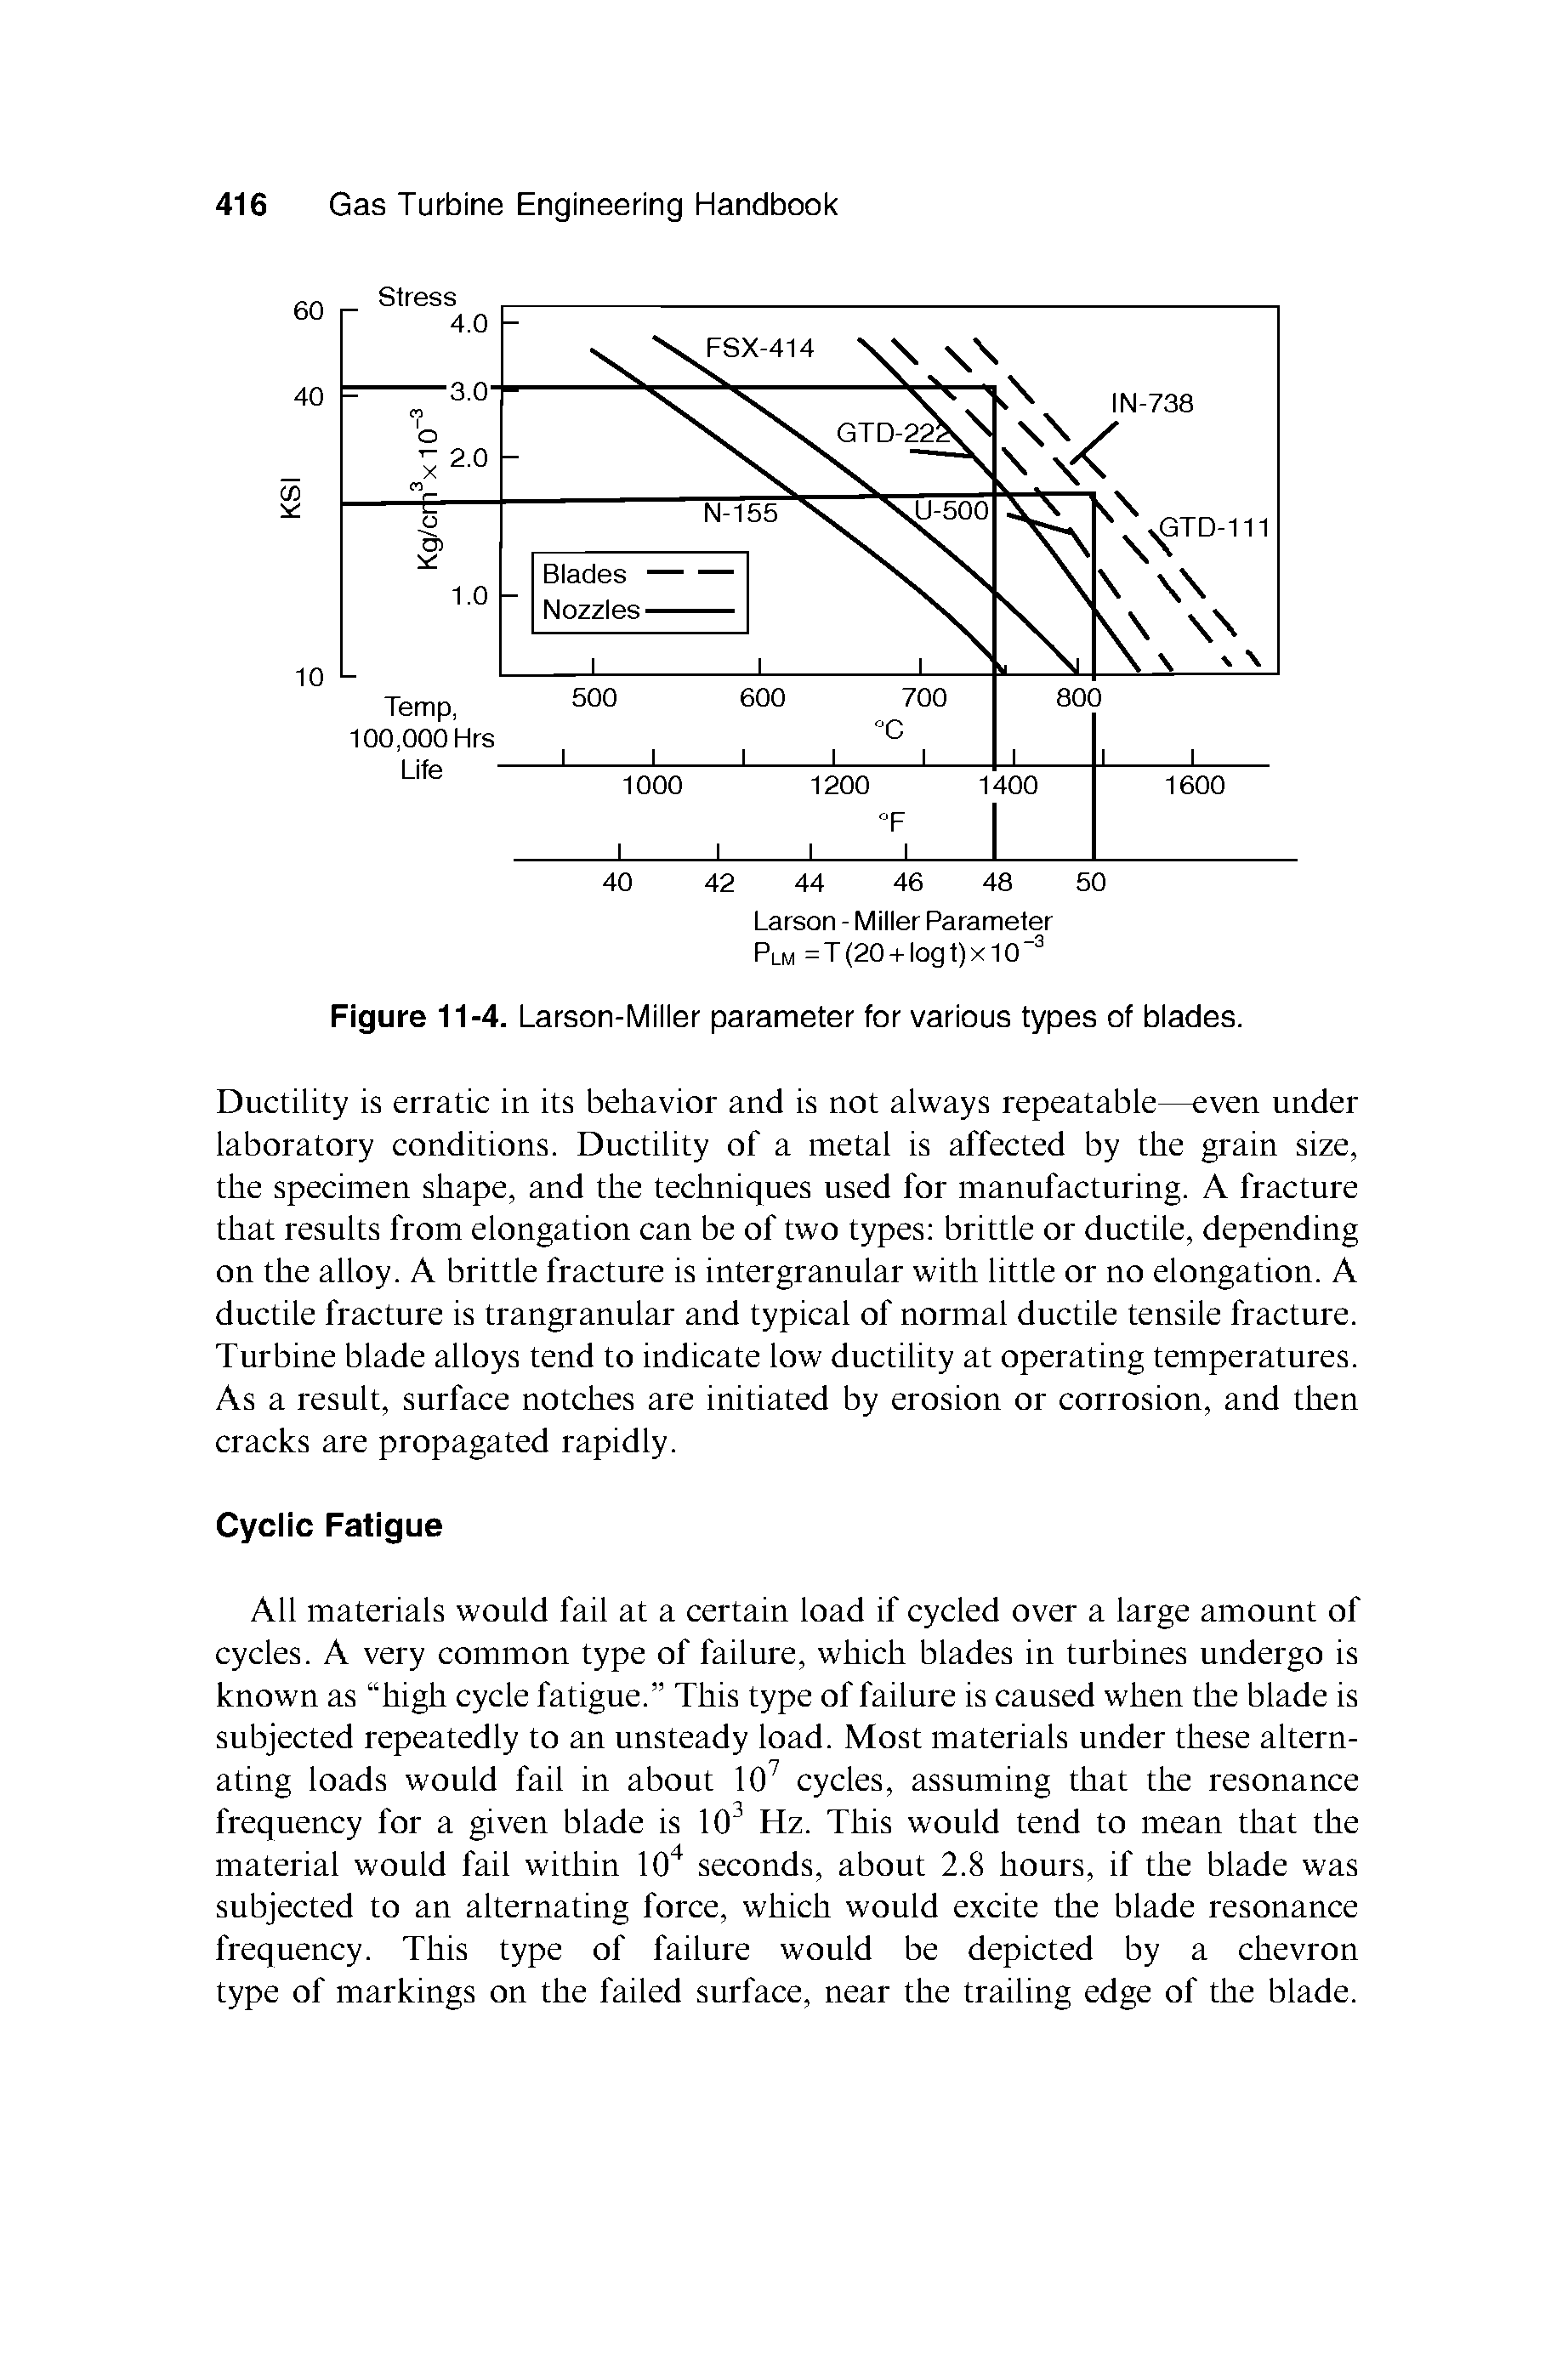 Figure 11-4. Larson-Miller parameter for various types of biades.